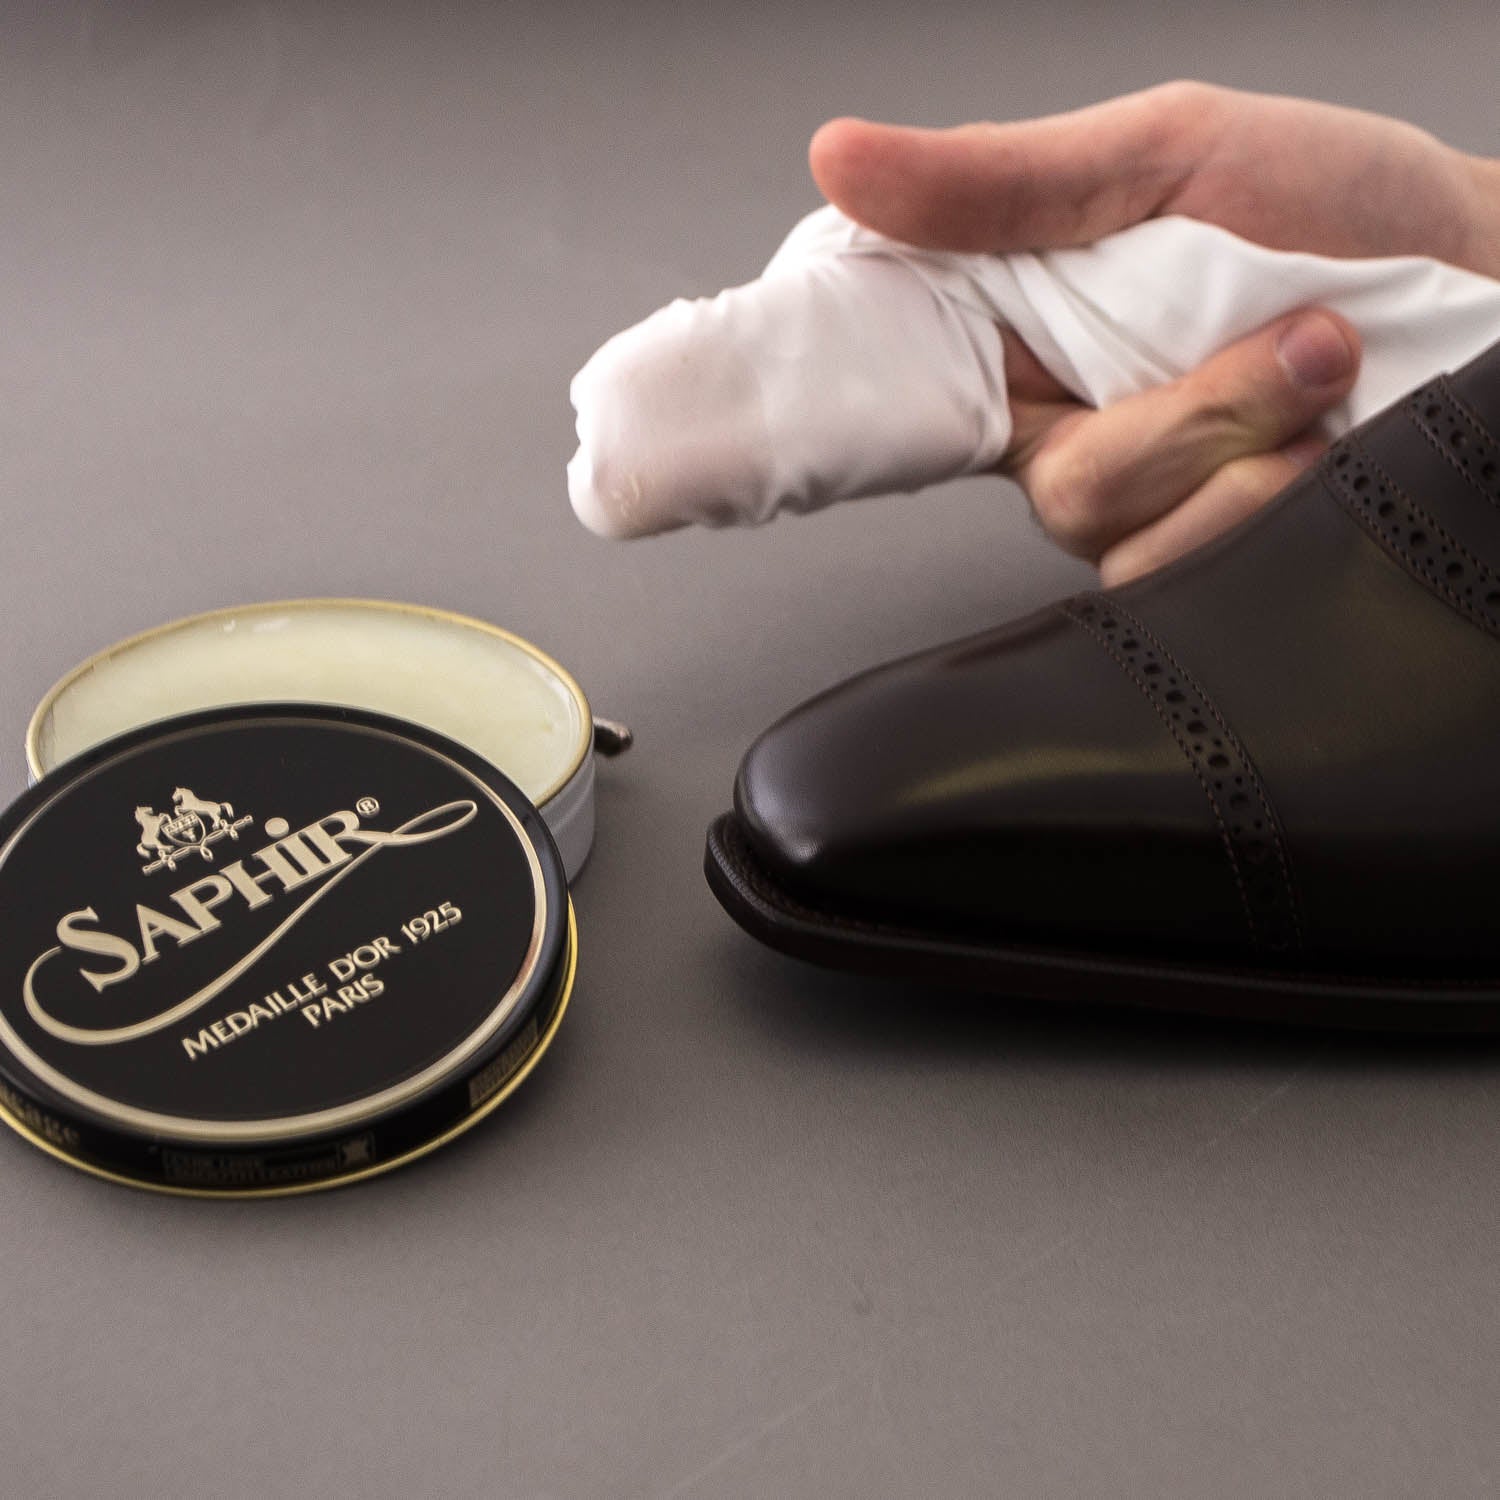 A person using the Wellington High-Shine Cotton Chamois from KirbyAllison.com to achieve a high-shine on a shoe.